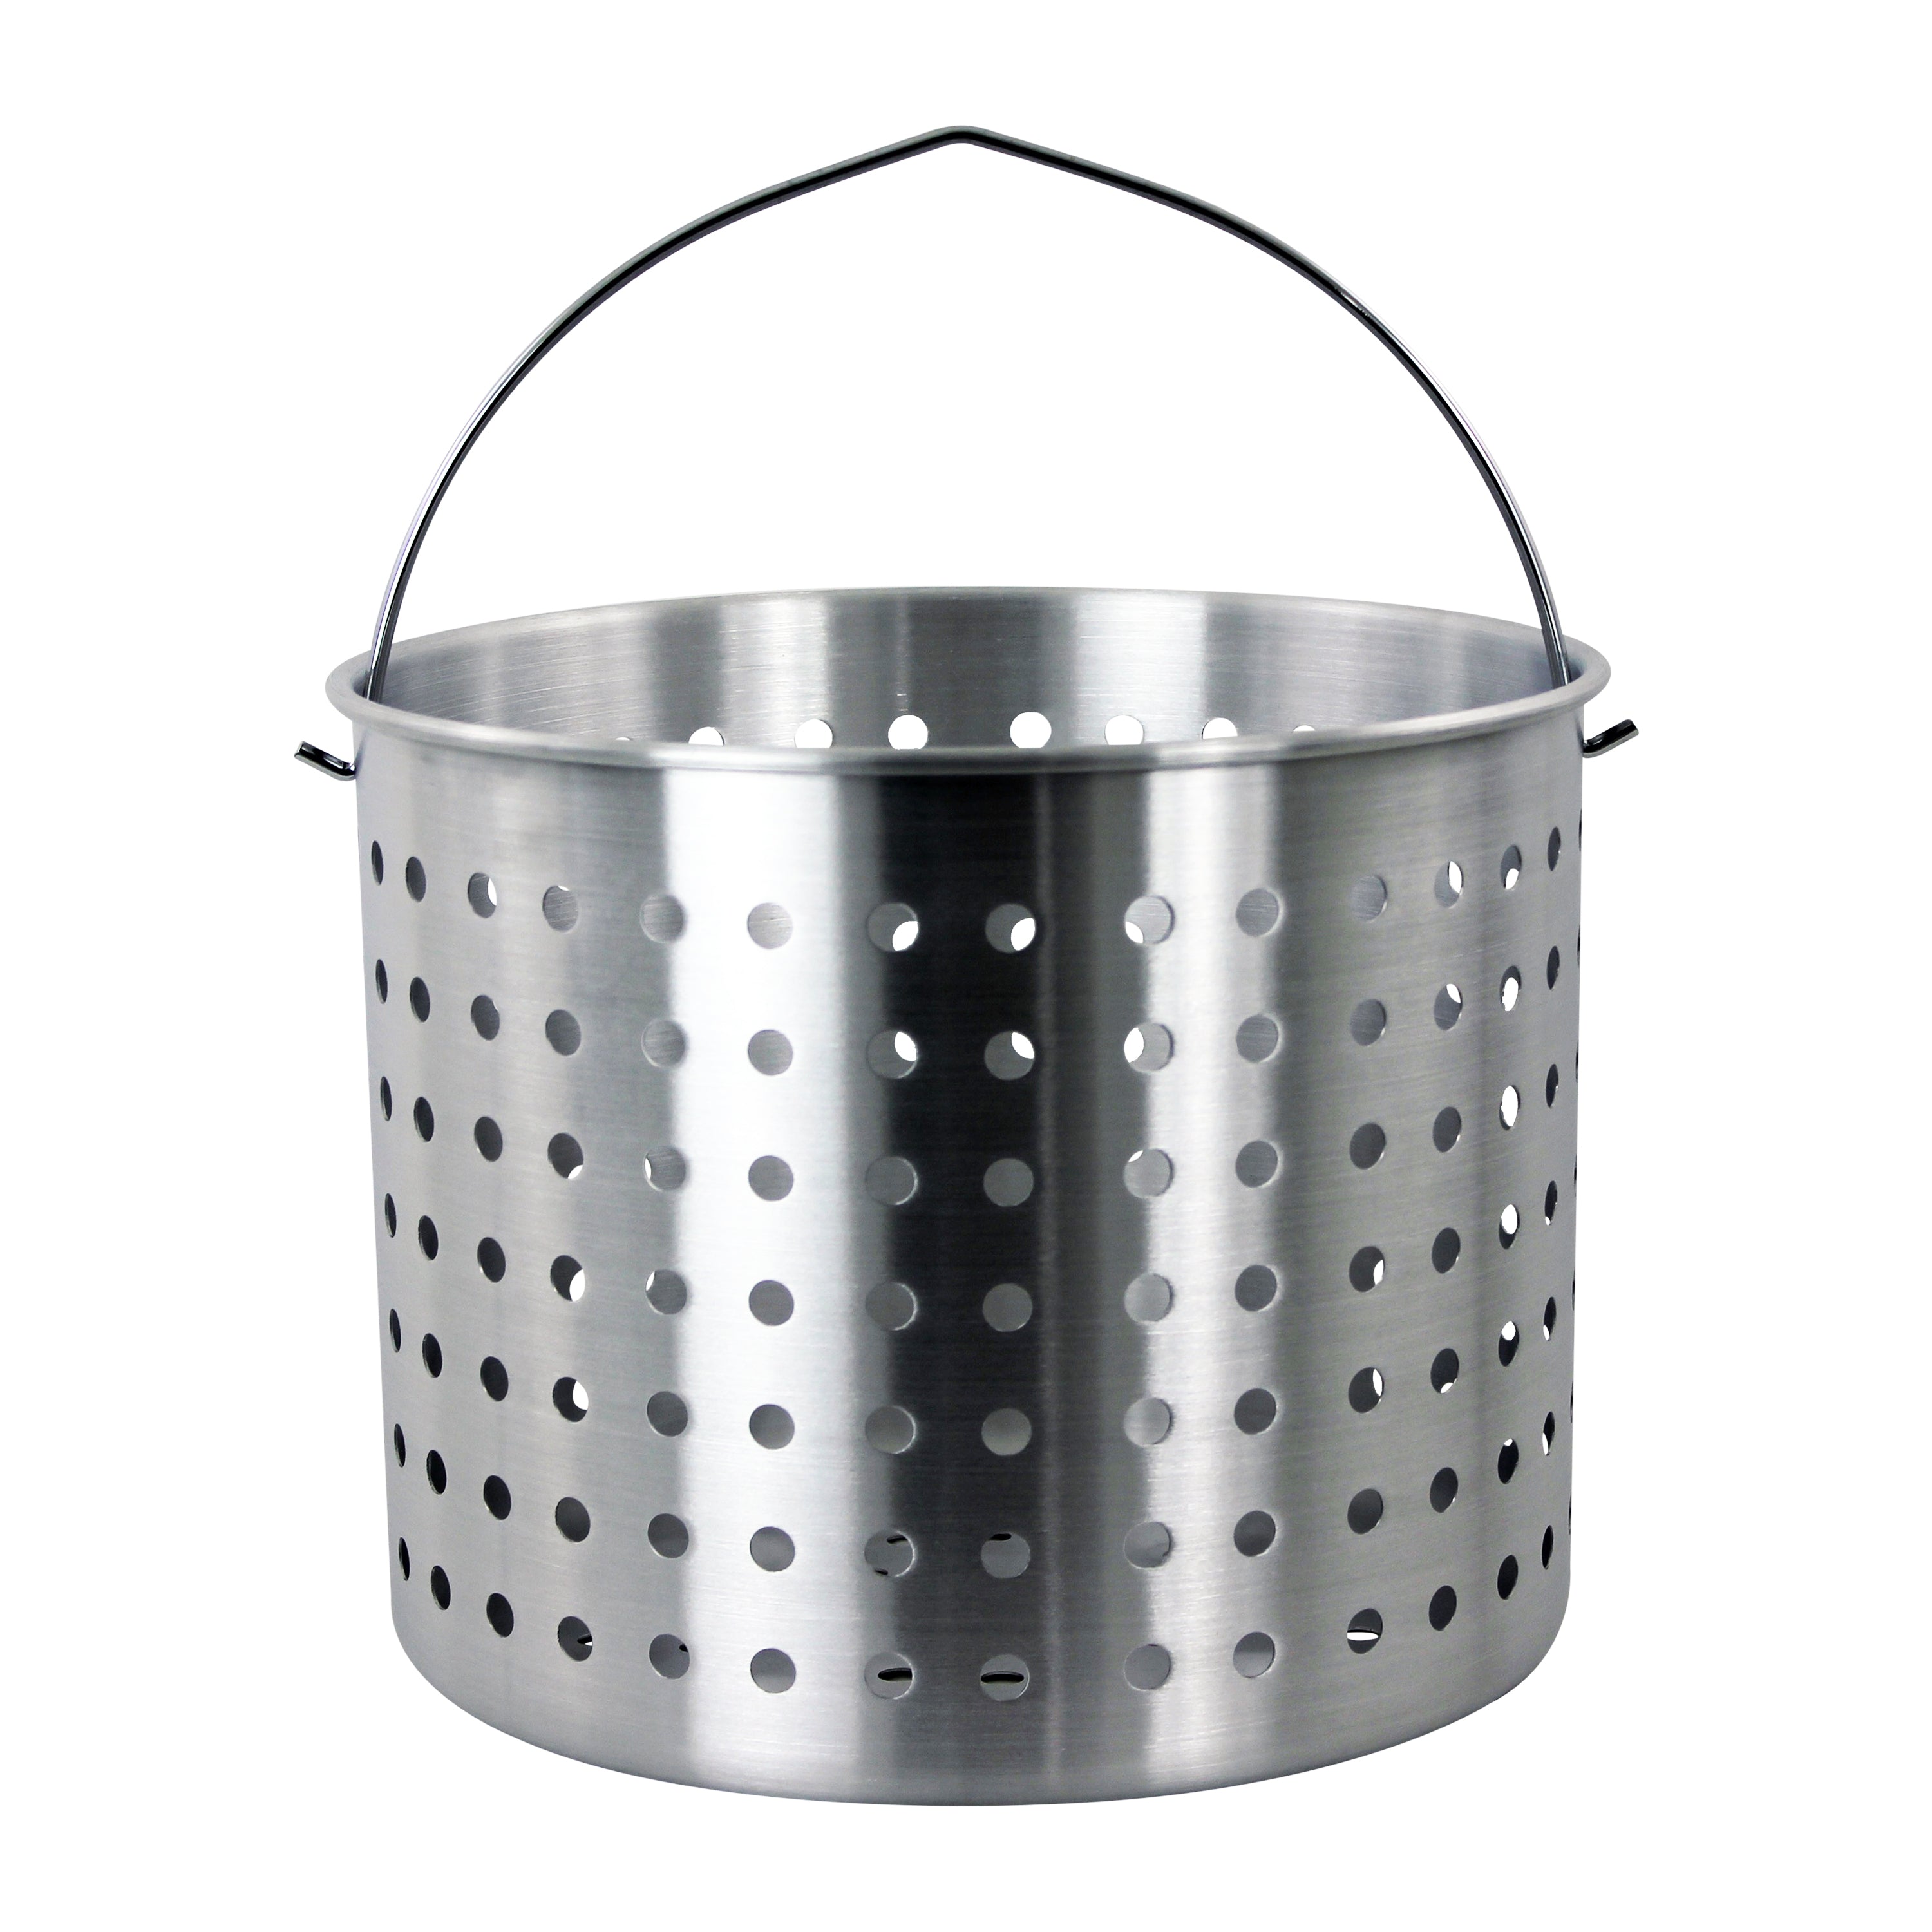 FBA12, Aluminum Stock Pot with Strainer Basket, 10.5 Quart